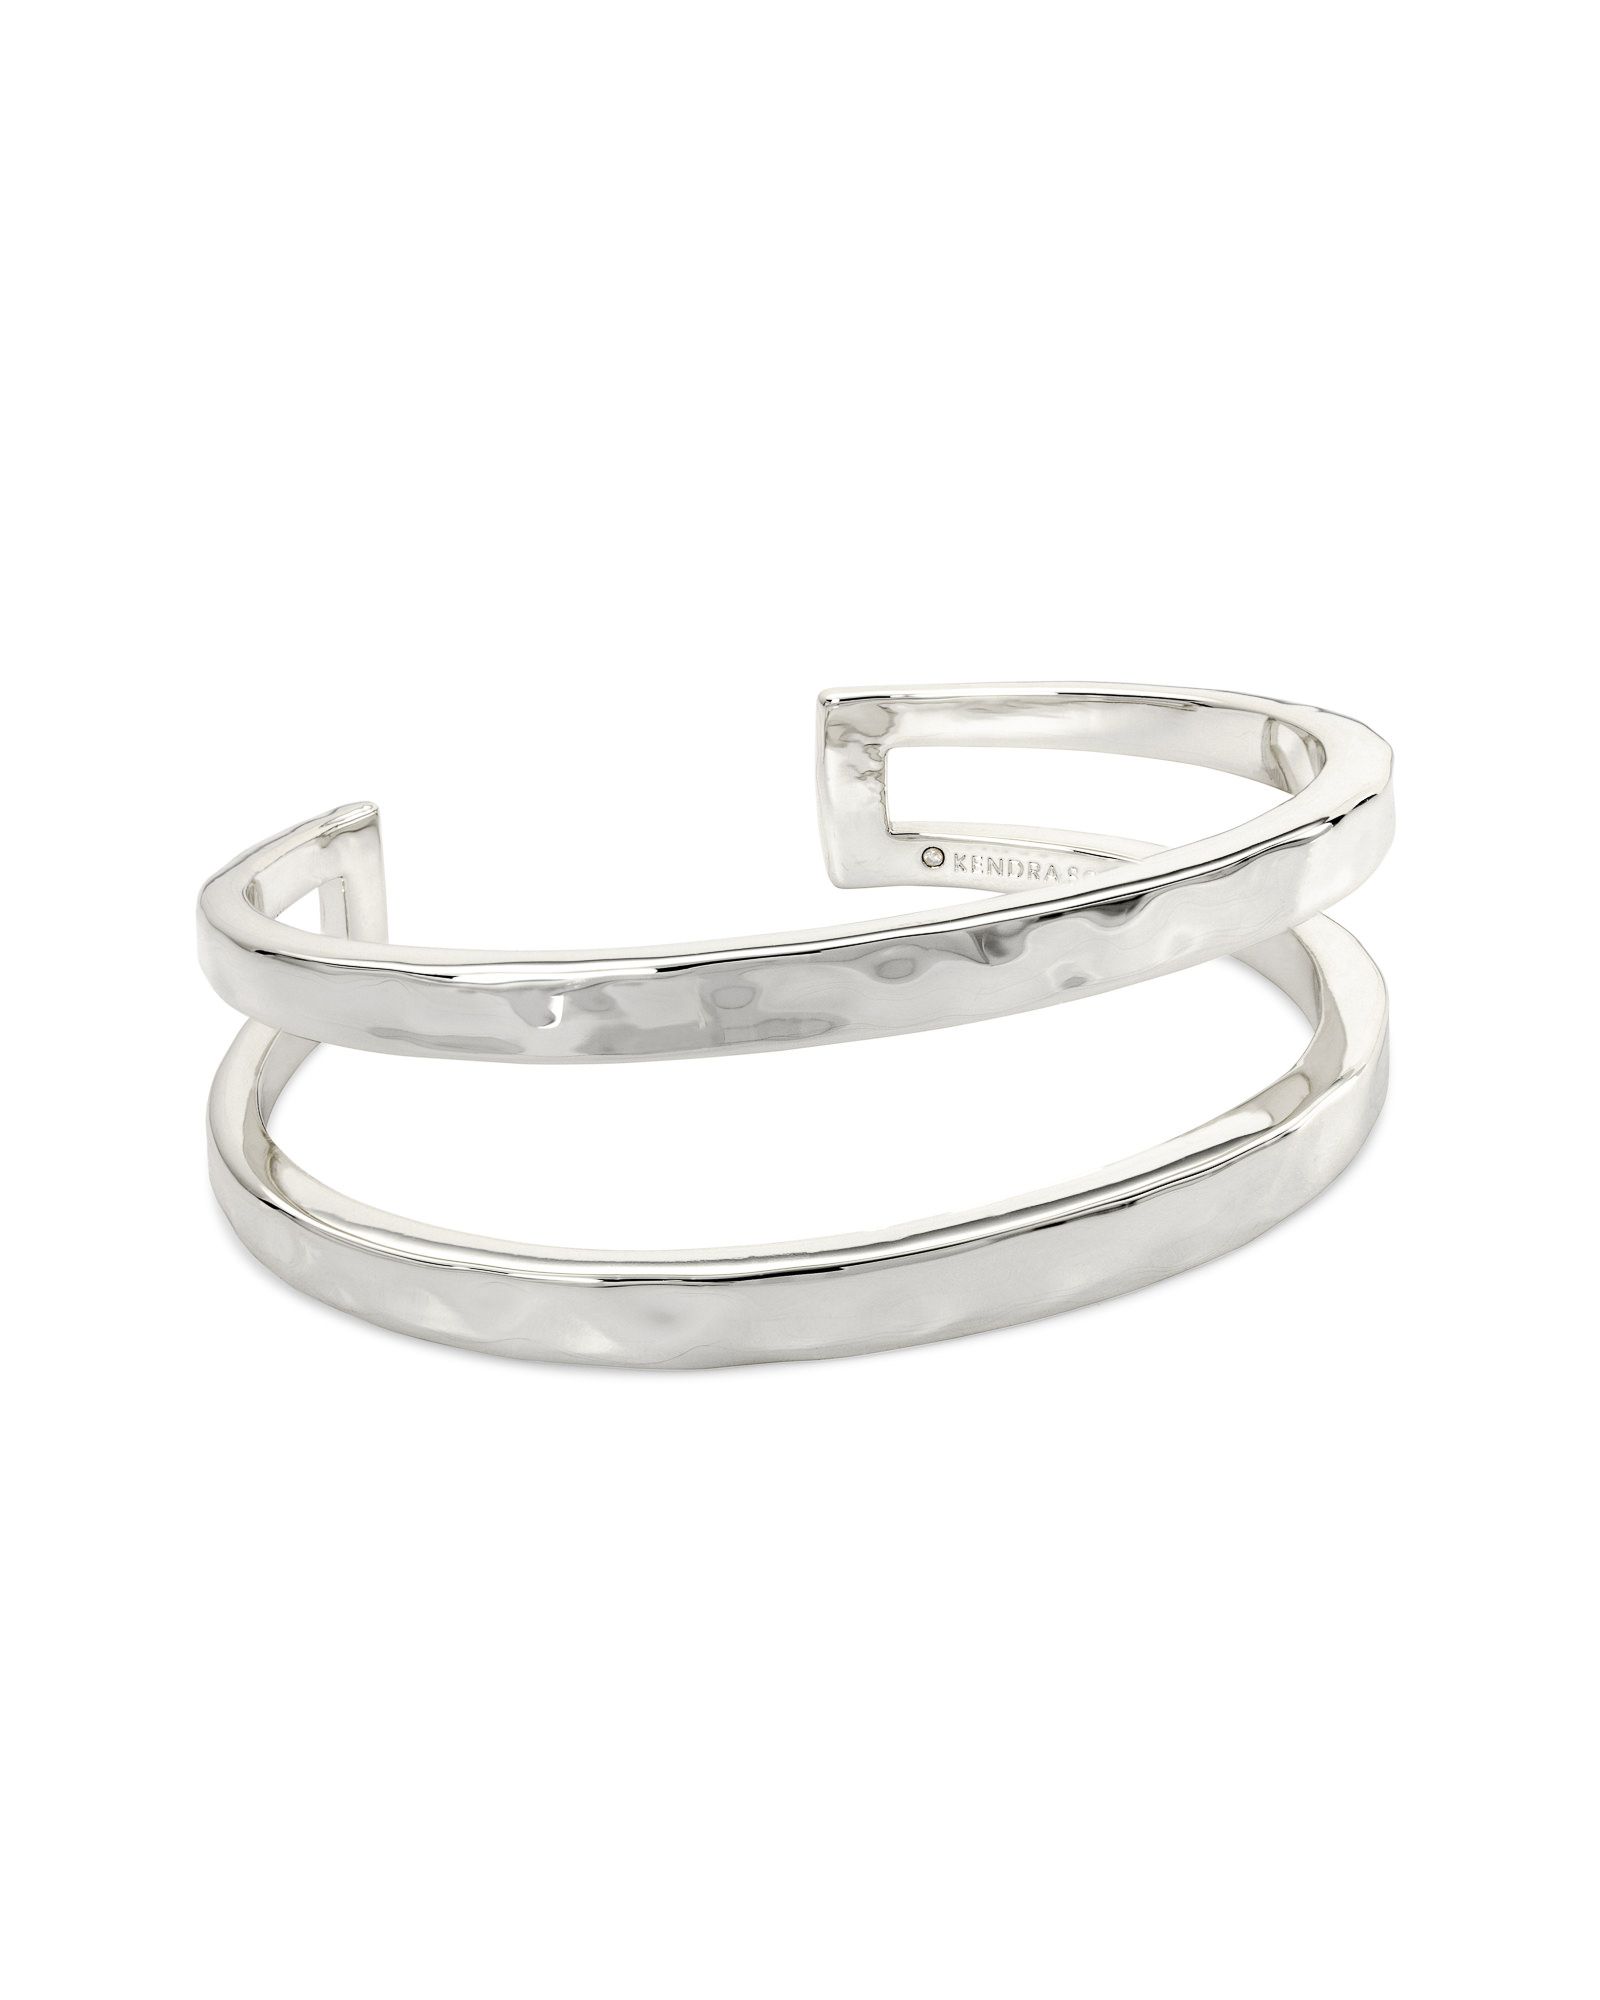 Zorte Cuff Bracelet in Silver - S/M | Kendra Scott